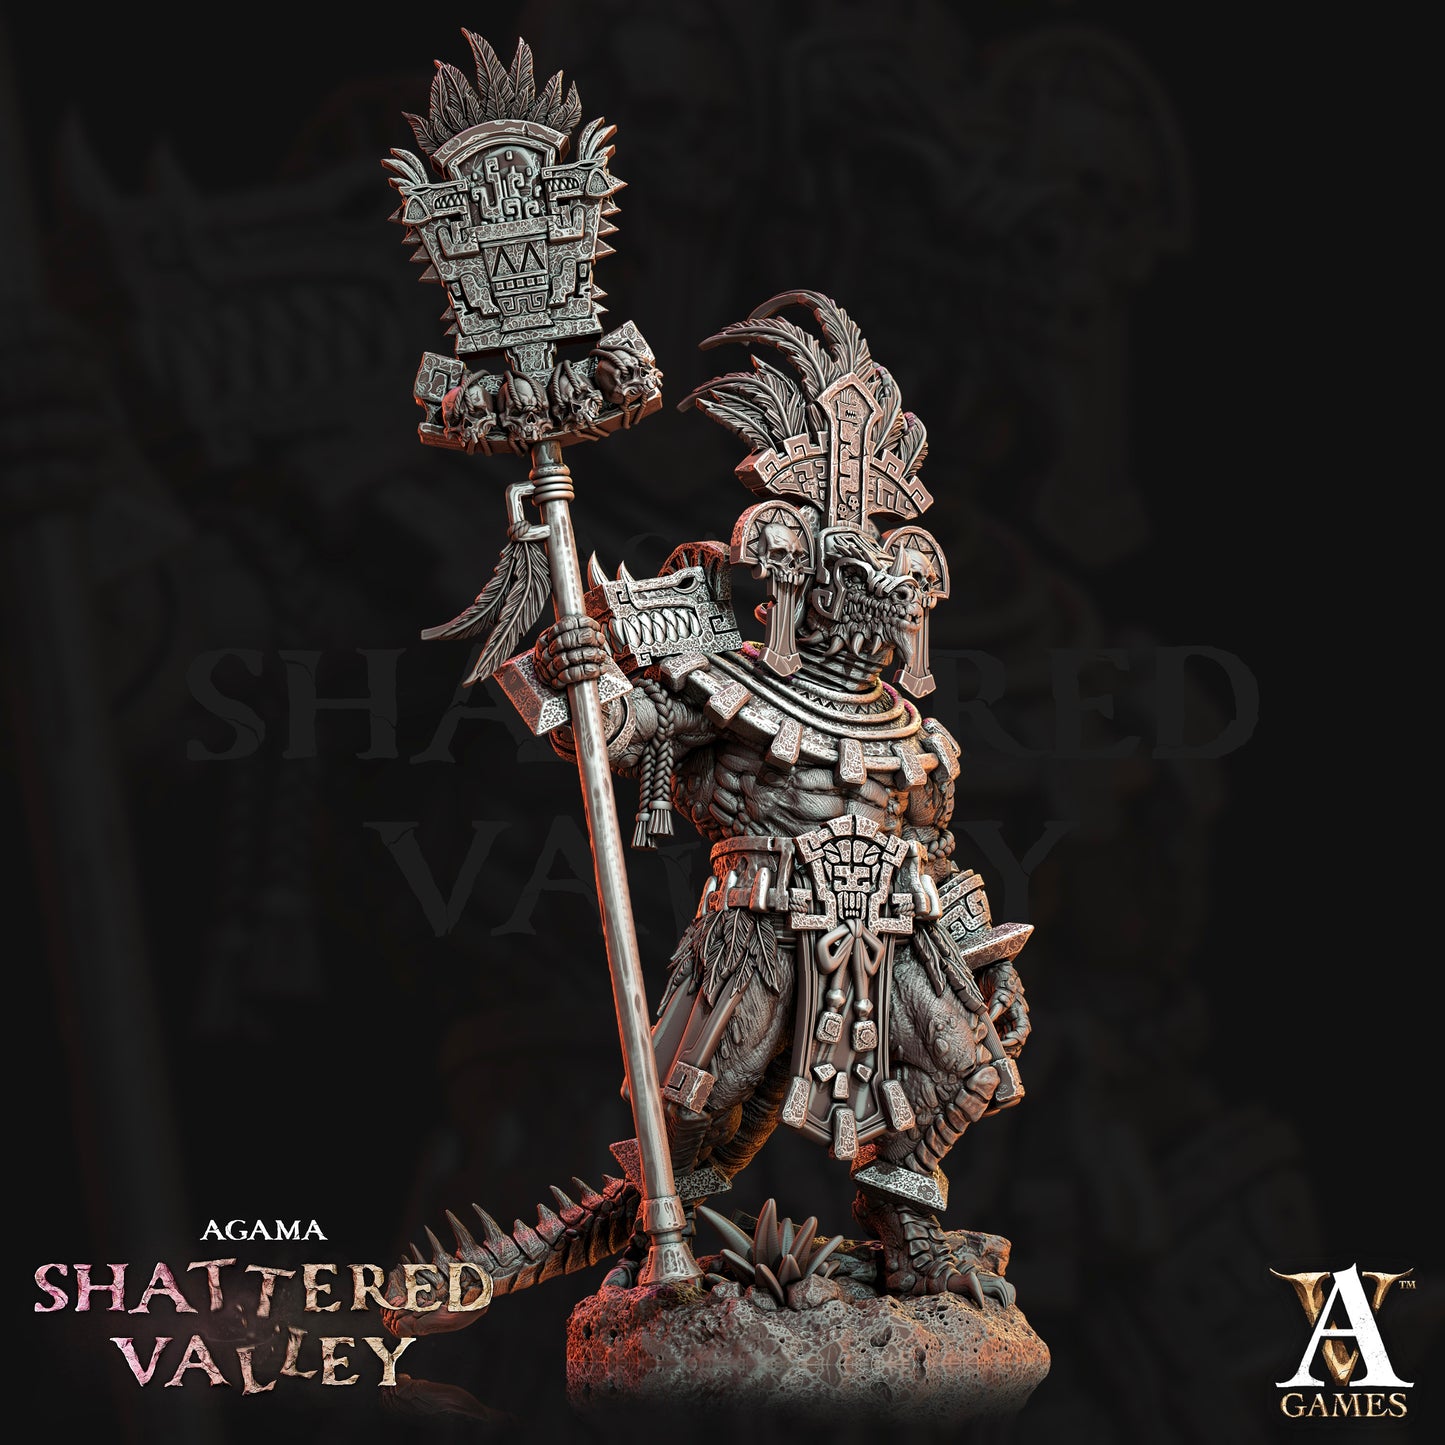 Agama Aztikal Painted Model - Archvillain Games Printed Miniature | Dungeons & Dragons | Pathfinder | Tabletop